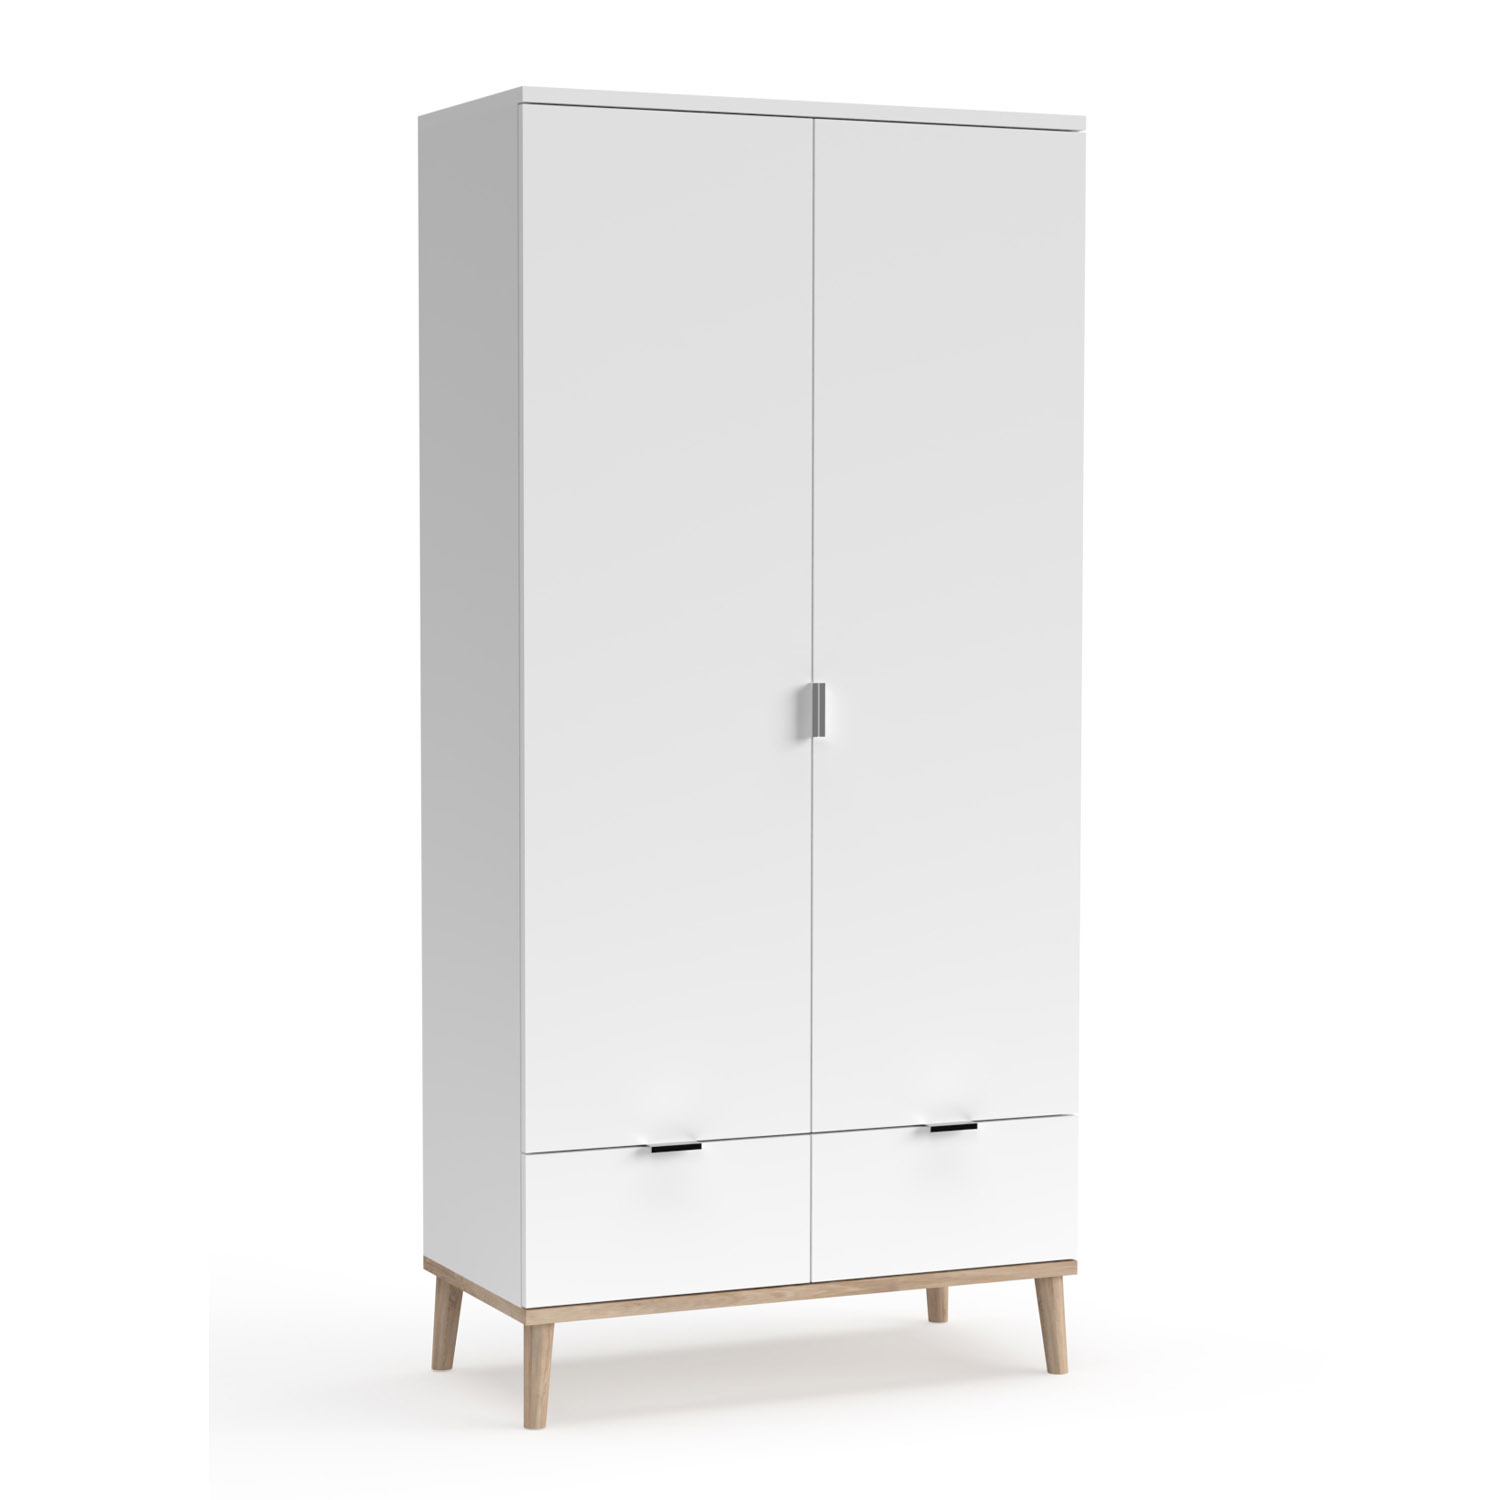 Wardrobe Closet White180 cm Wood Cabinet 2 Doors Hallway Cabinet Multipurpose Cabinet